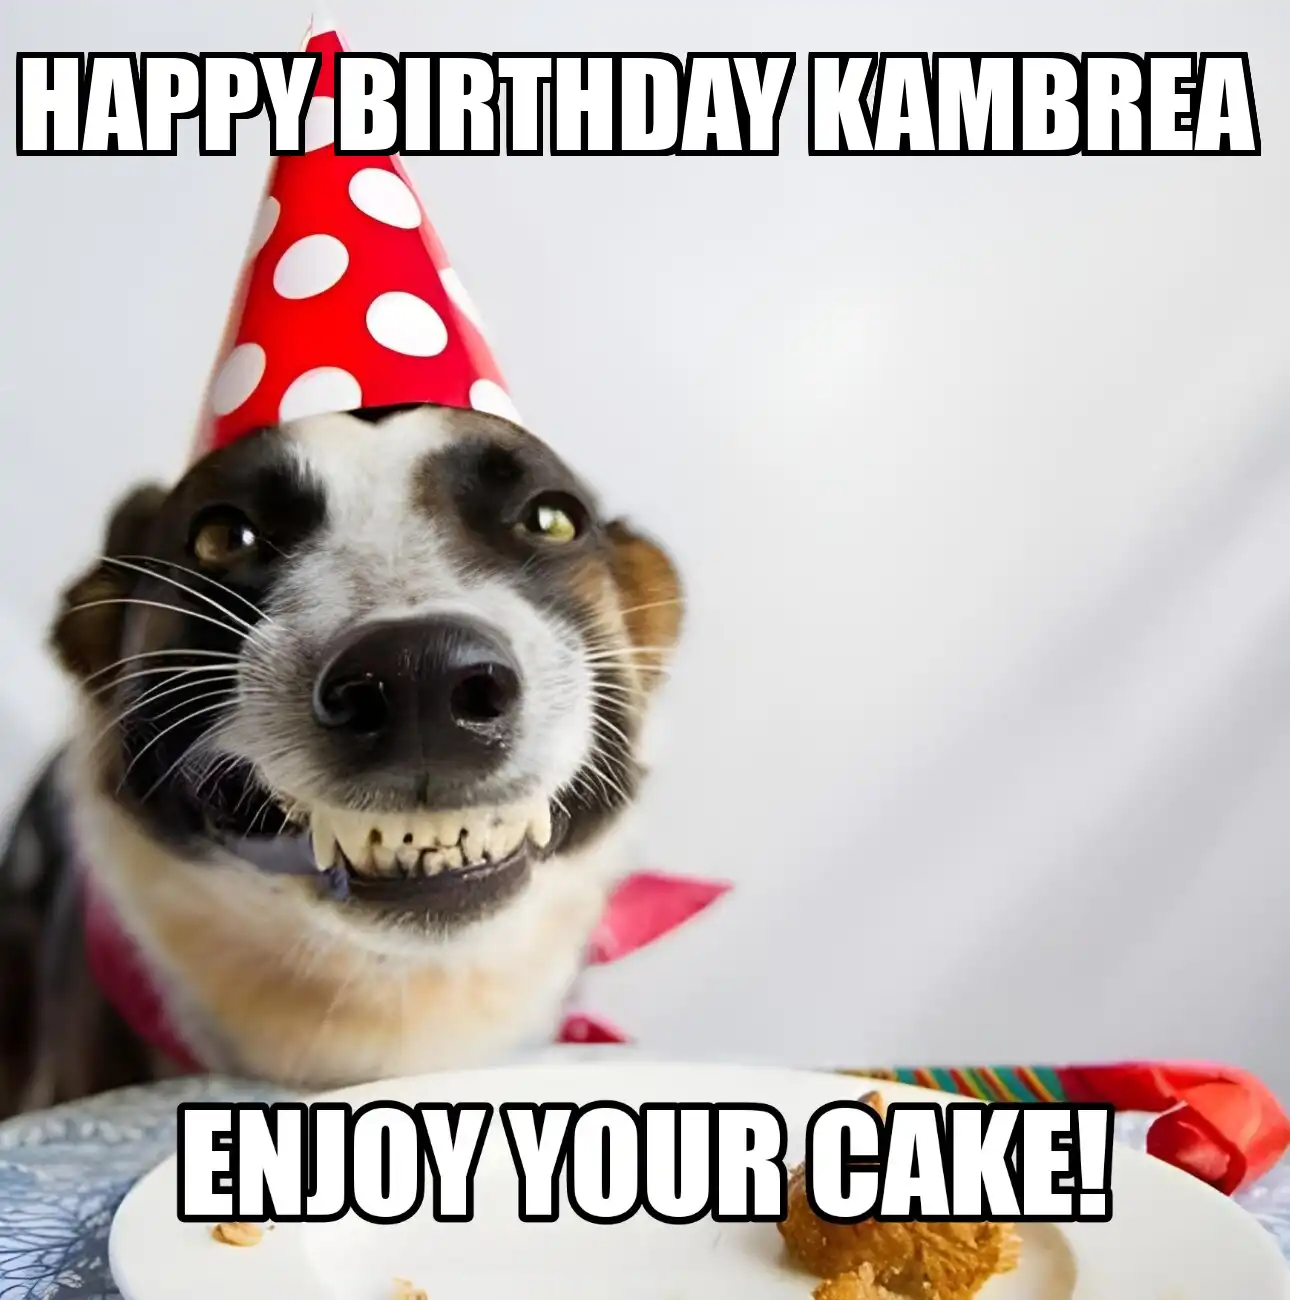 Happy Birthday Kambrea Enjoy Your Cake Dog Meme